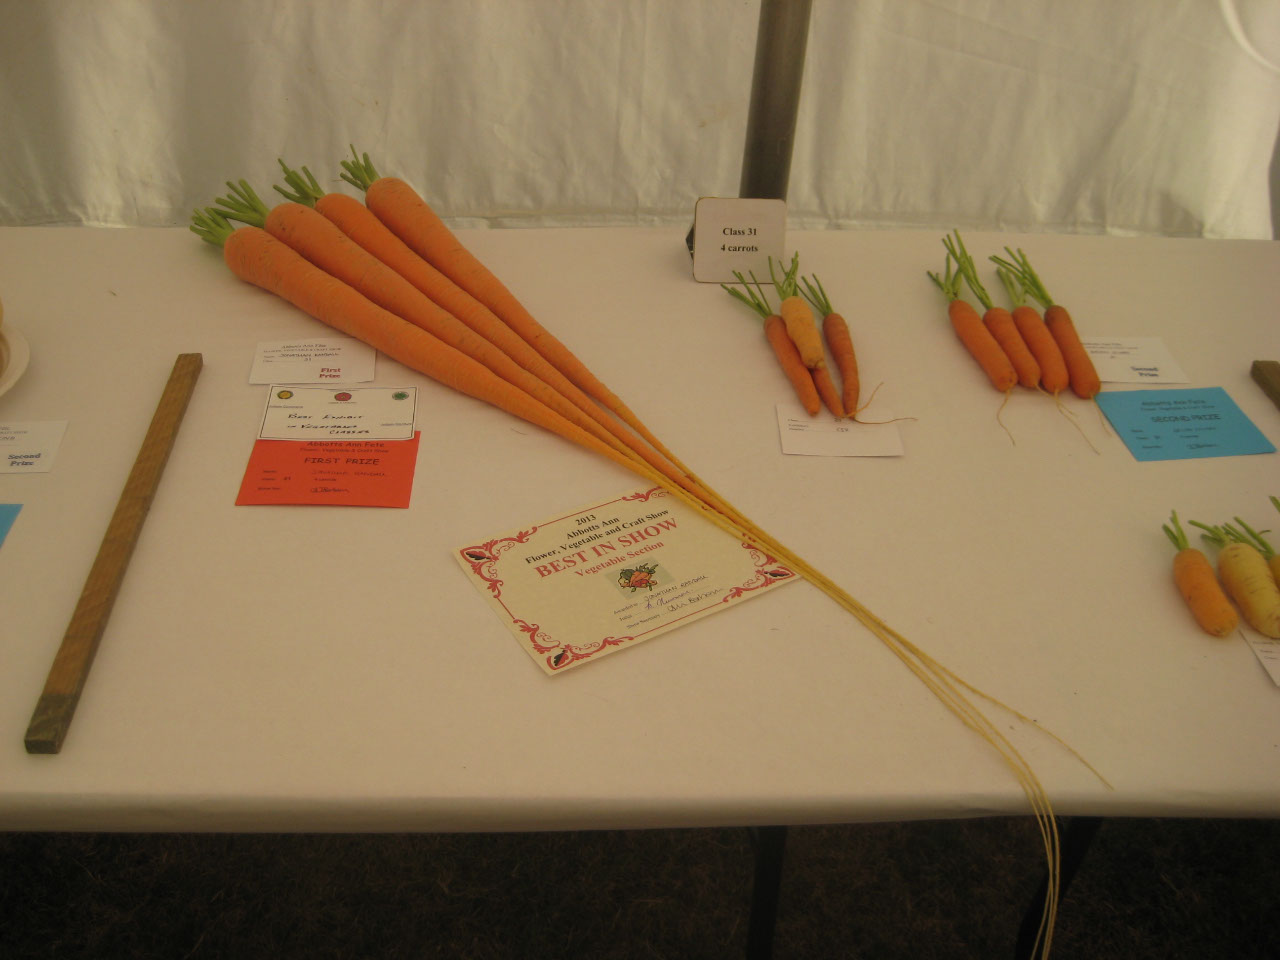 Very long carrots